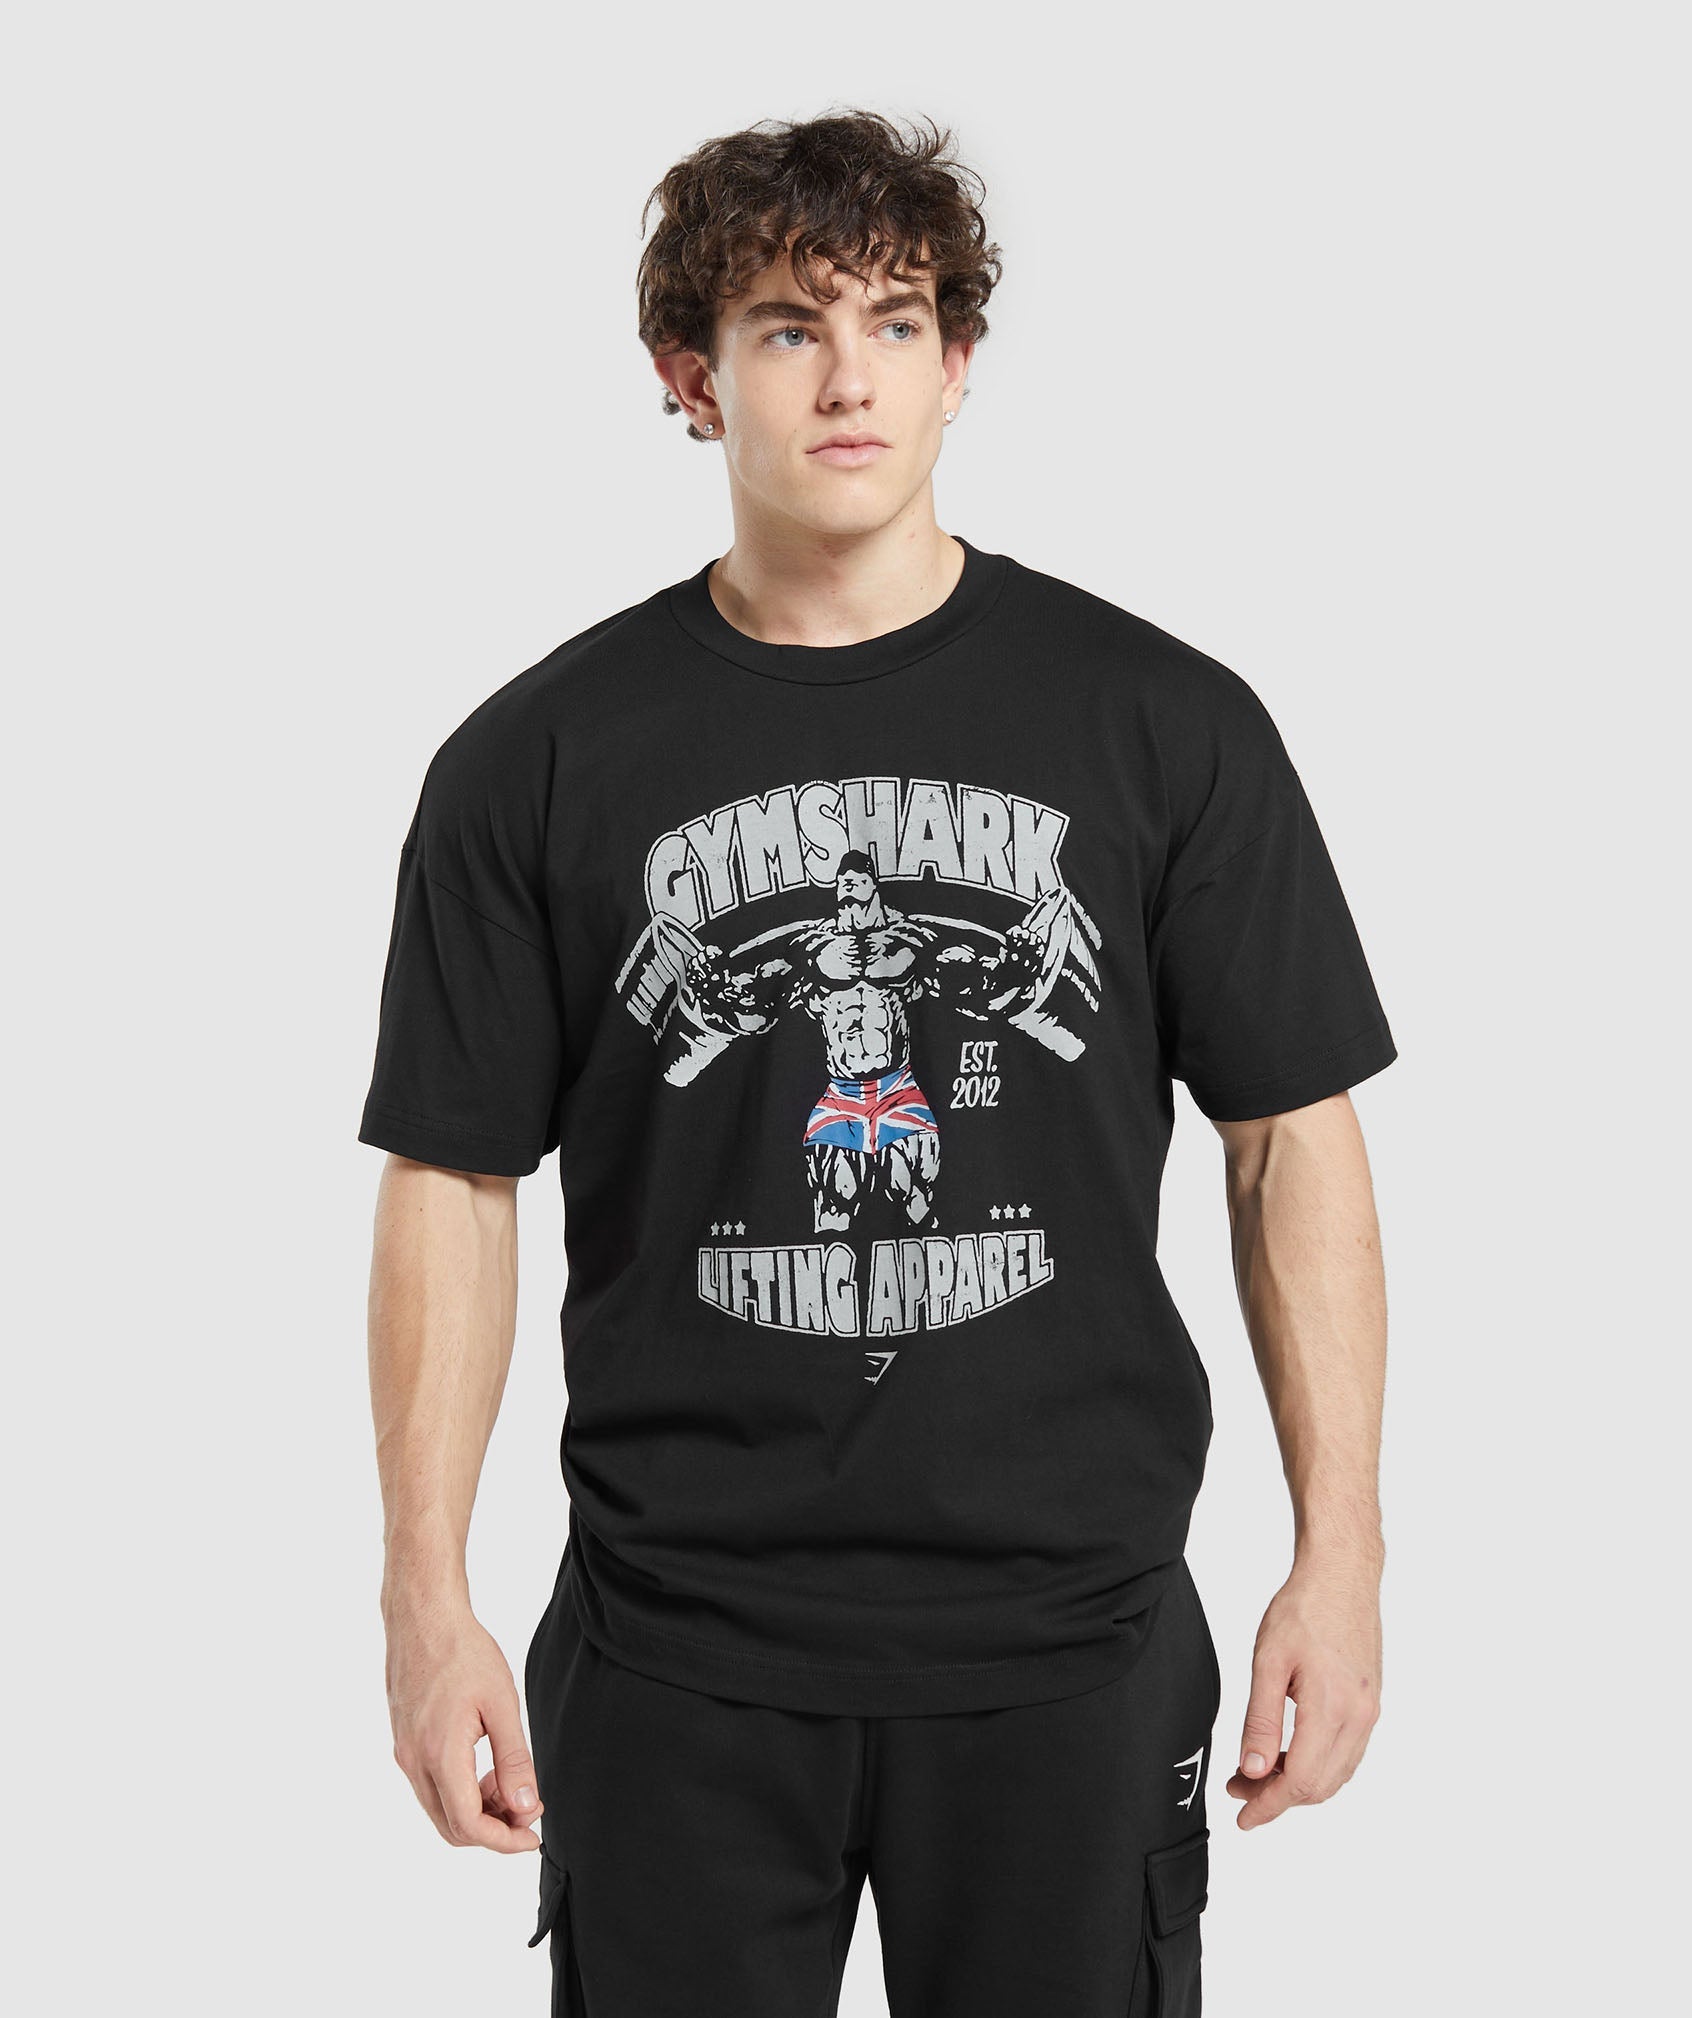 Gymshark Lifting Apparel T-Shirt - Black